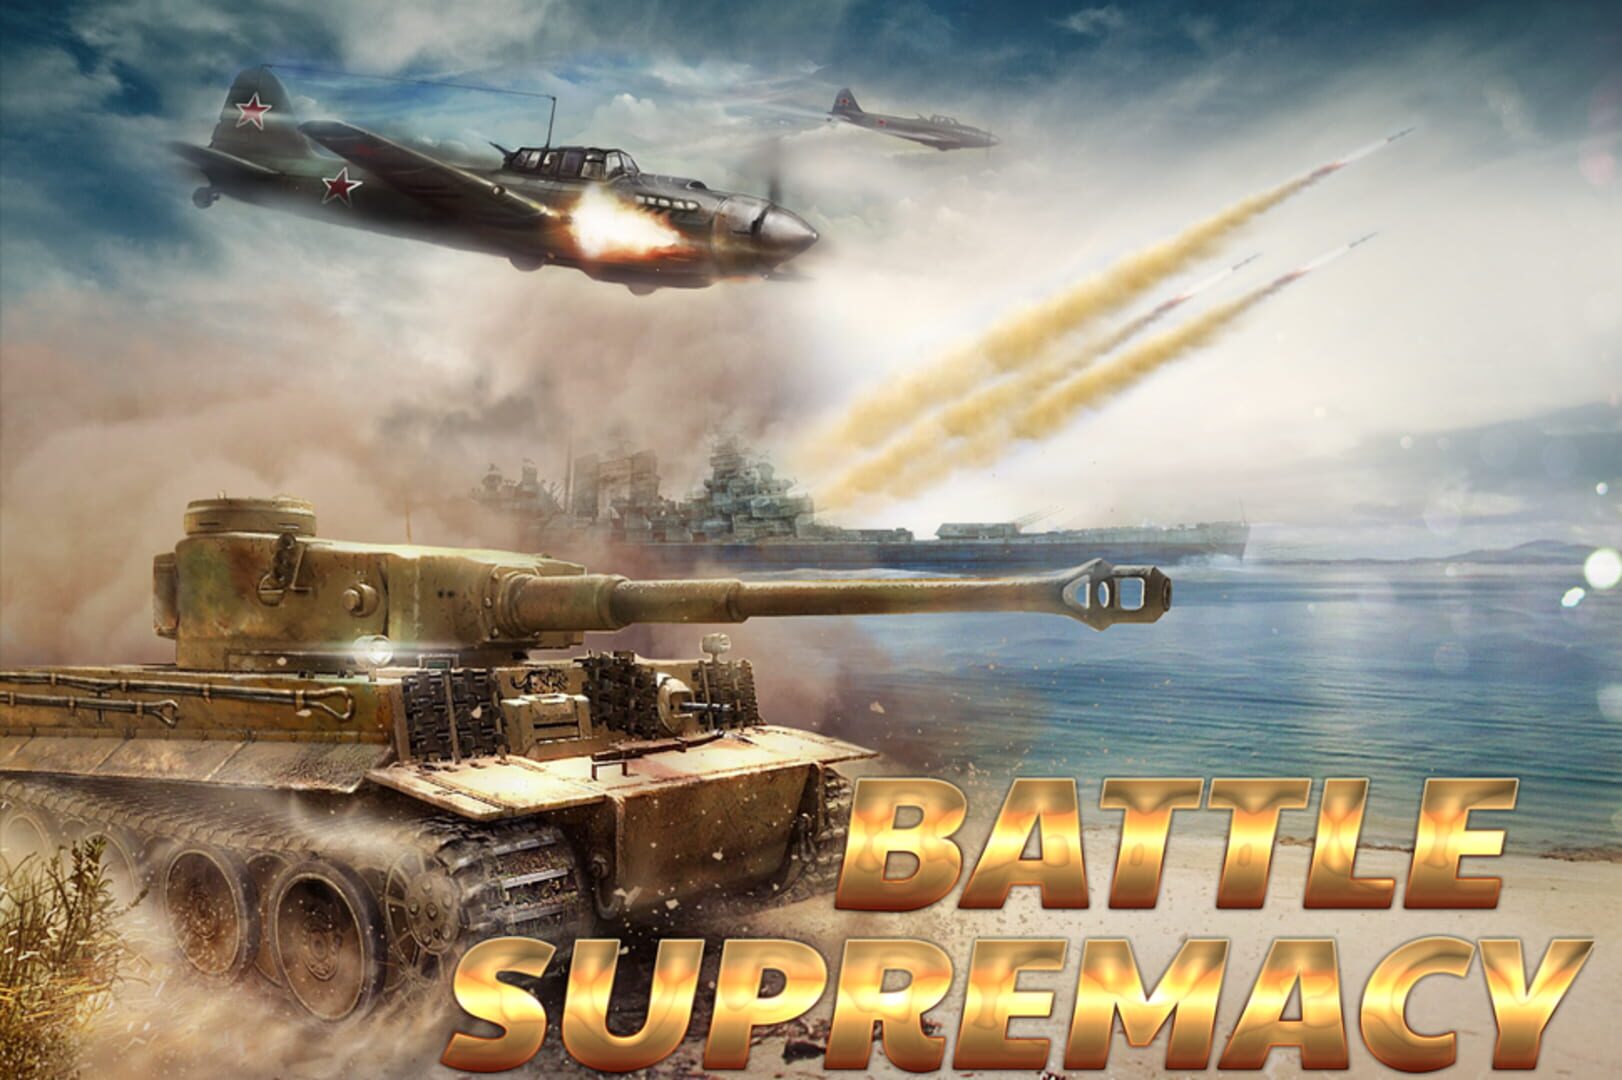 Battle Supremacy artwork